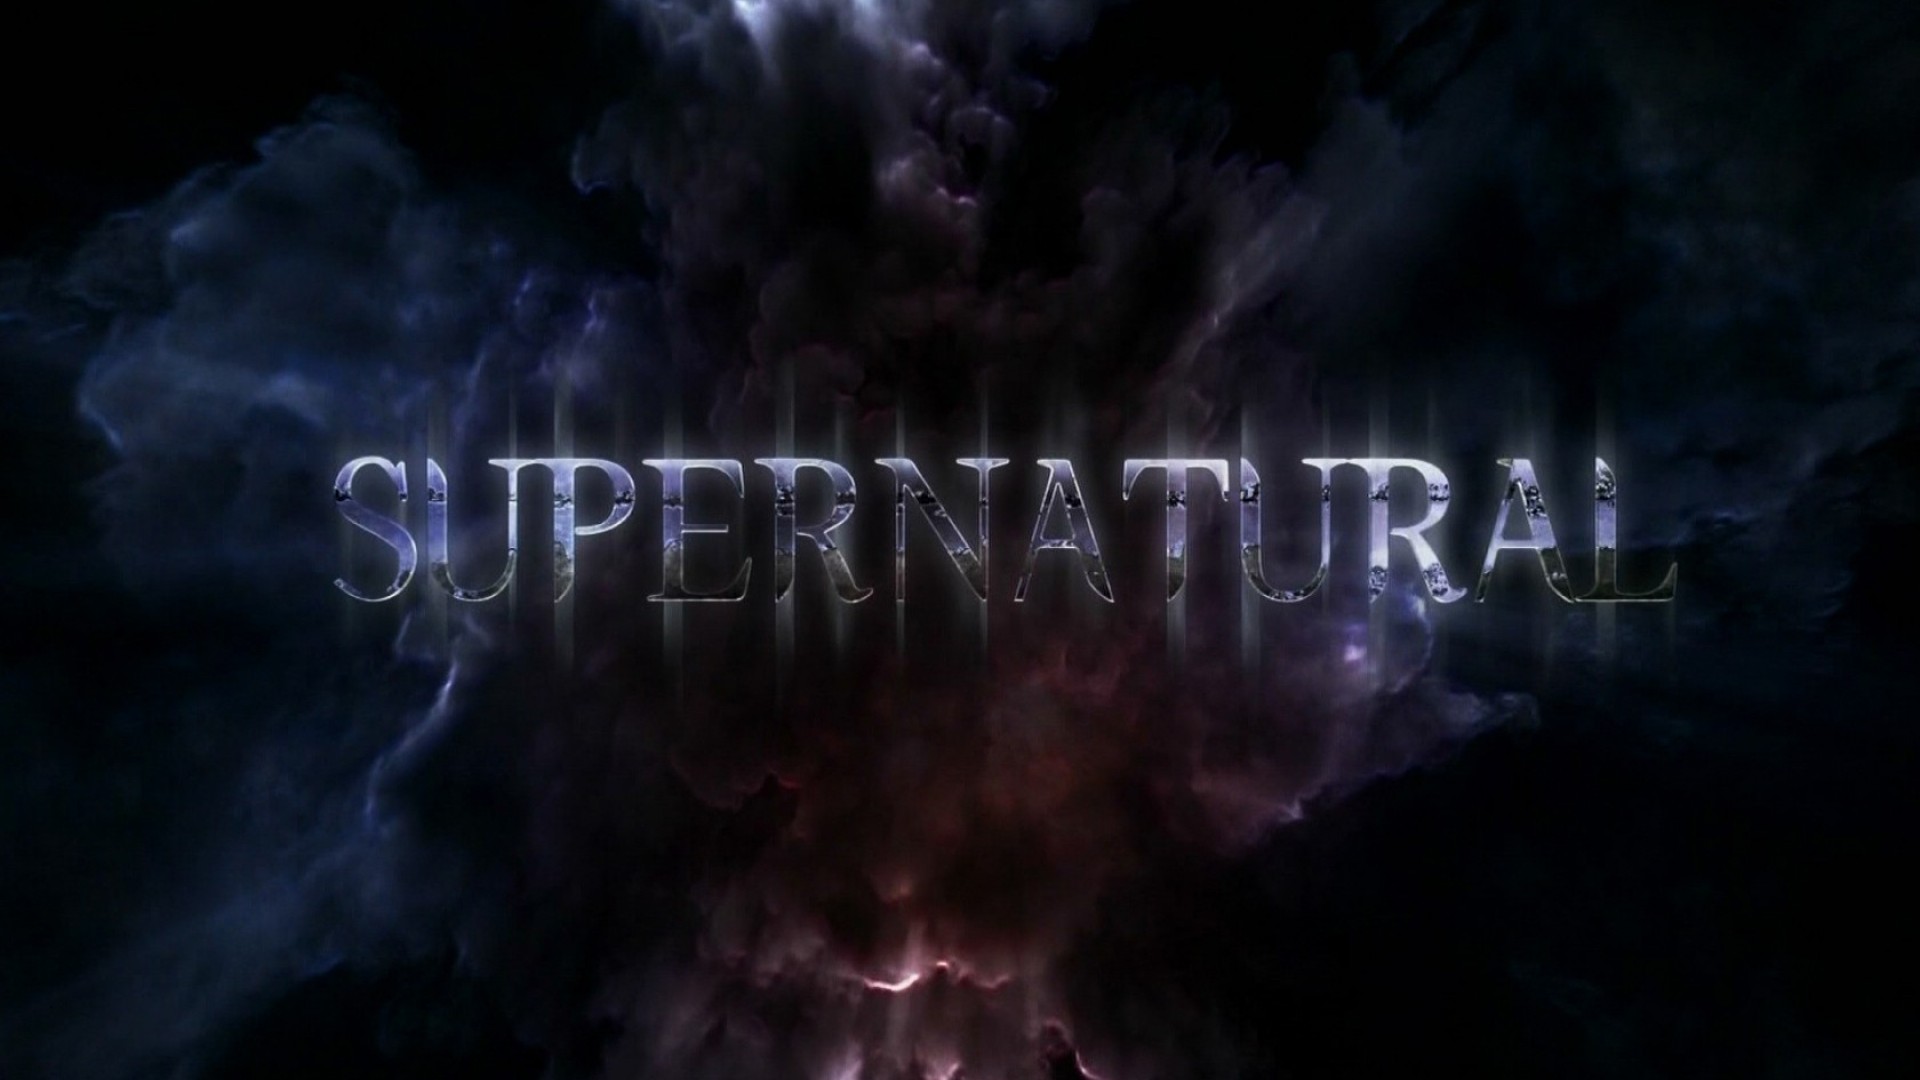 Screenheaven Supernatural Desktop And Mobile Background